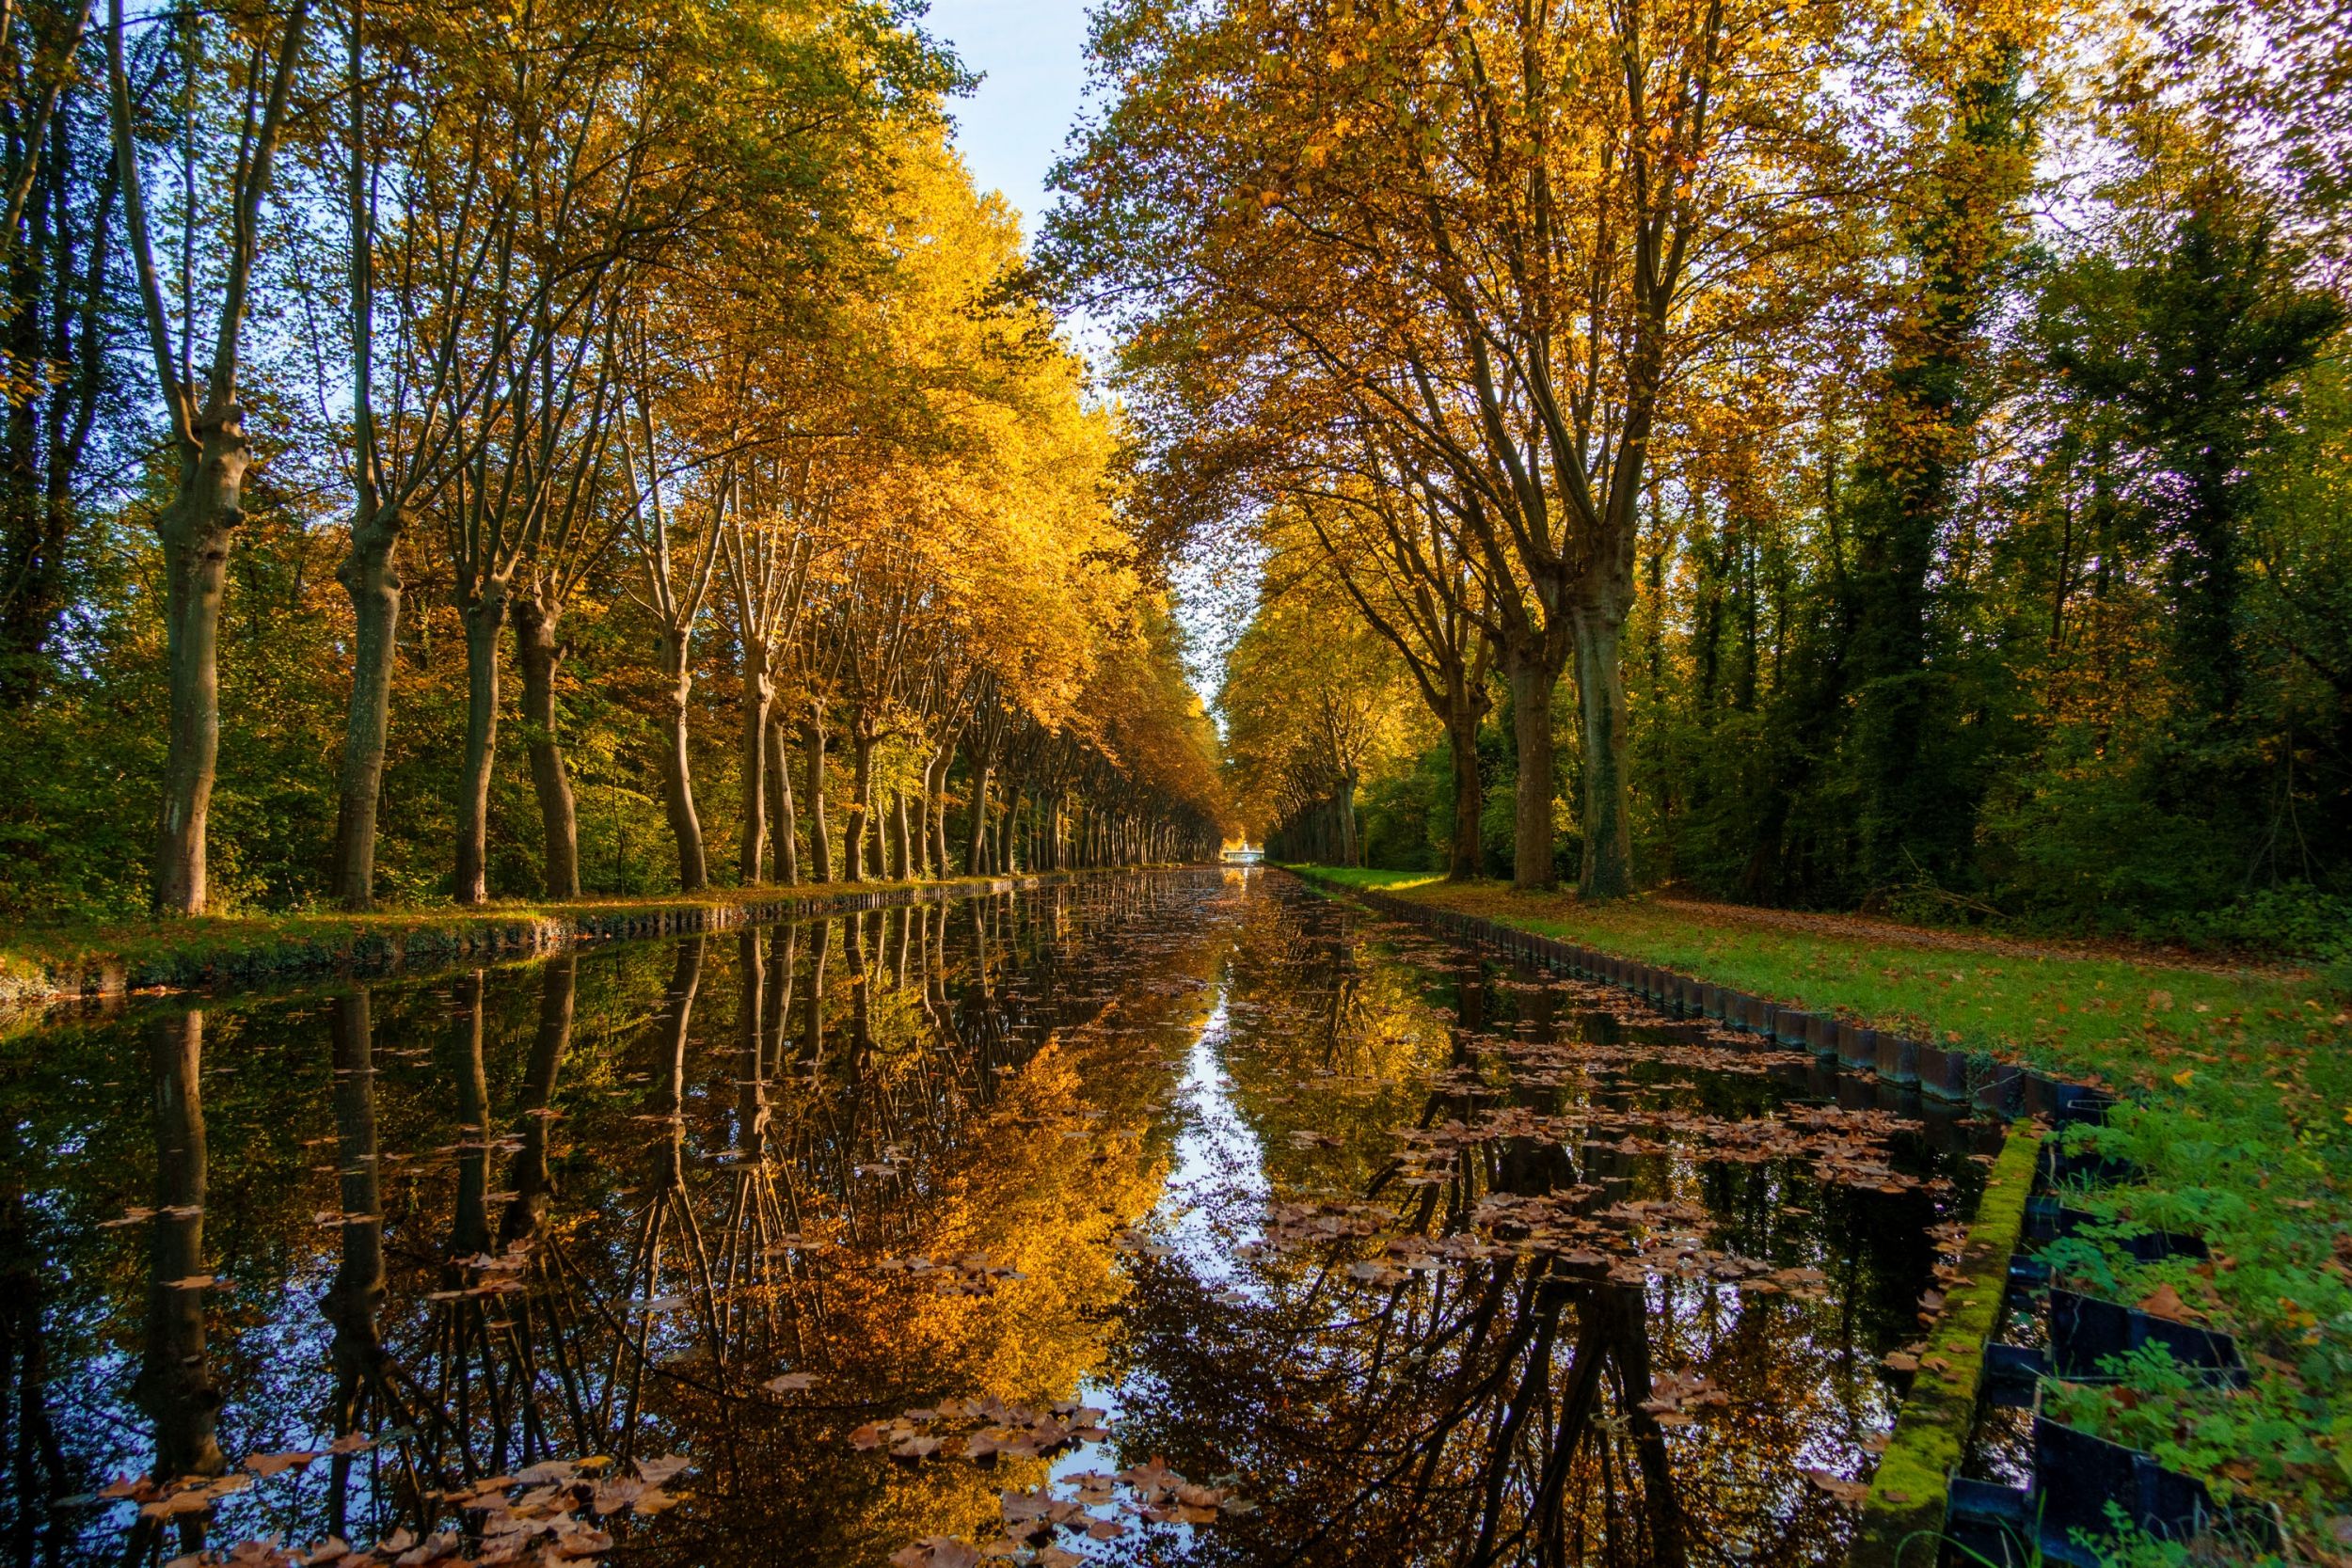 Herbst am Canal